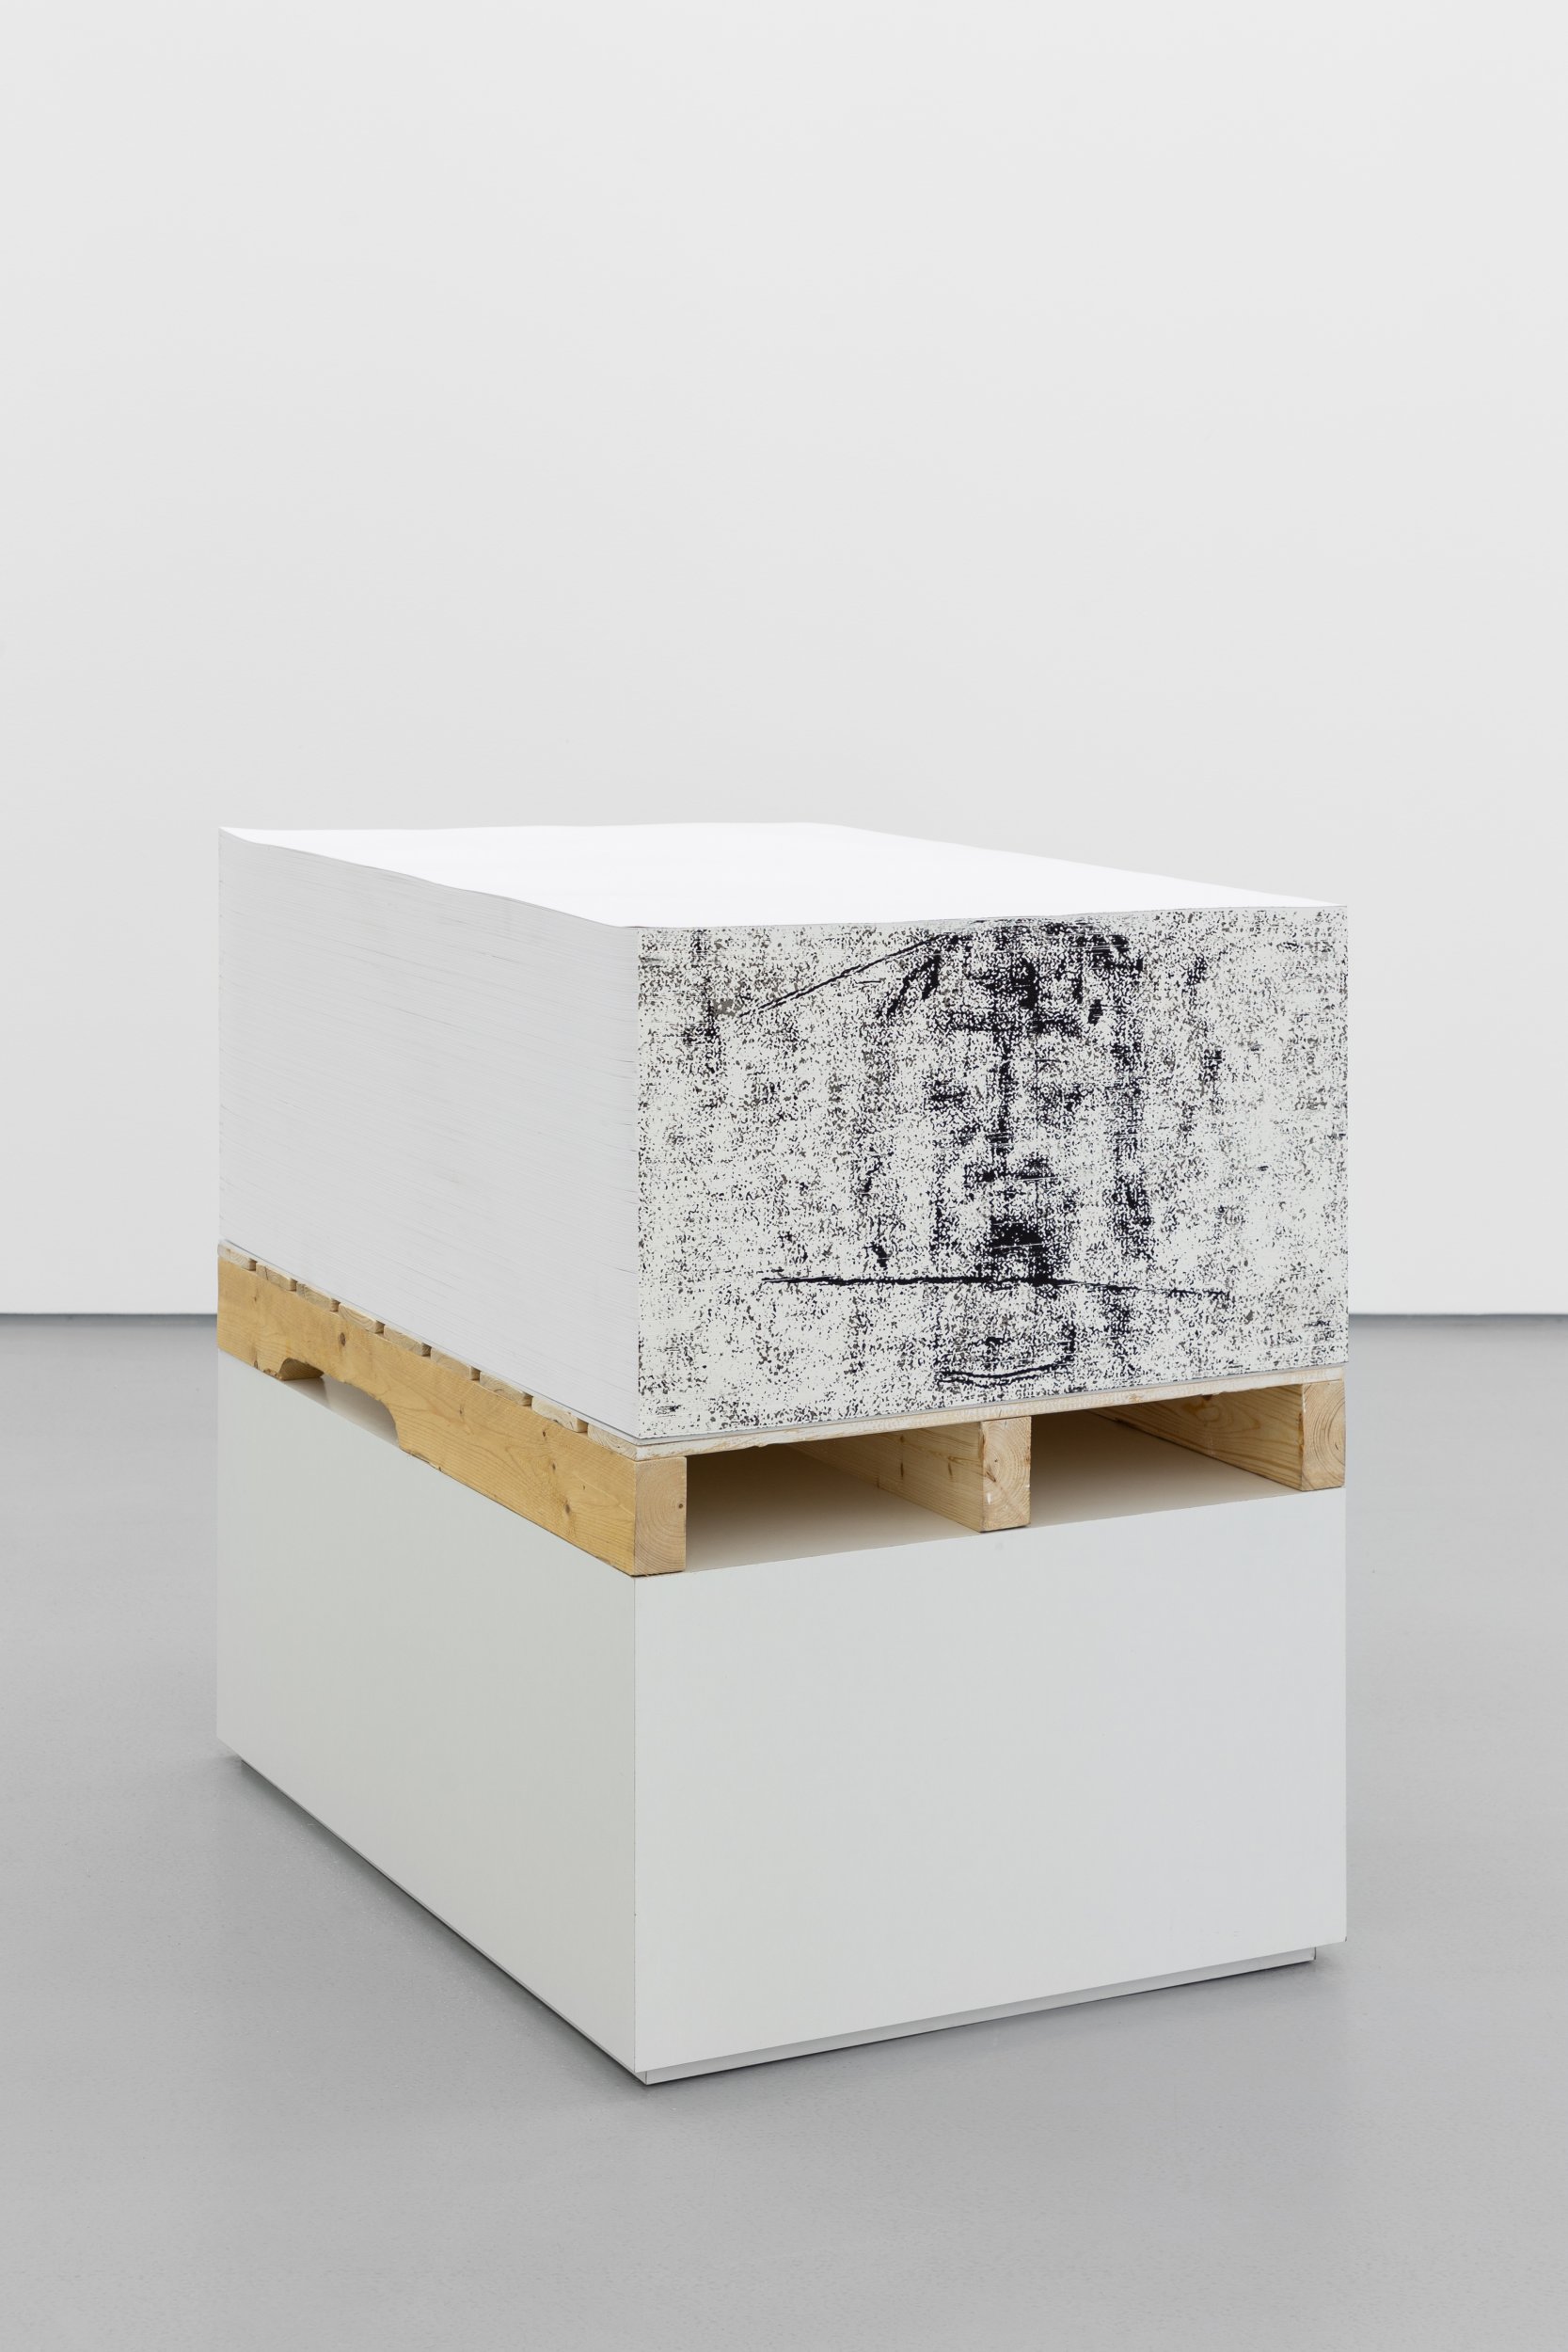 João Louro, Shroud, 2015-2022. Silkscreen on 1500 sheets of Albus paper. 96 x 70 x 100 cm. Unique
